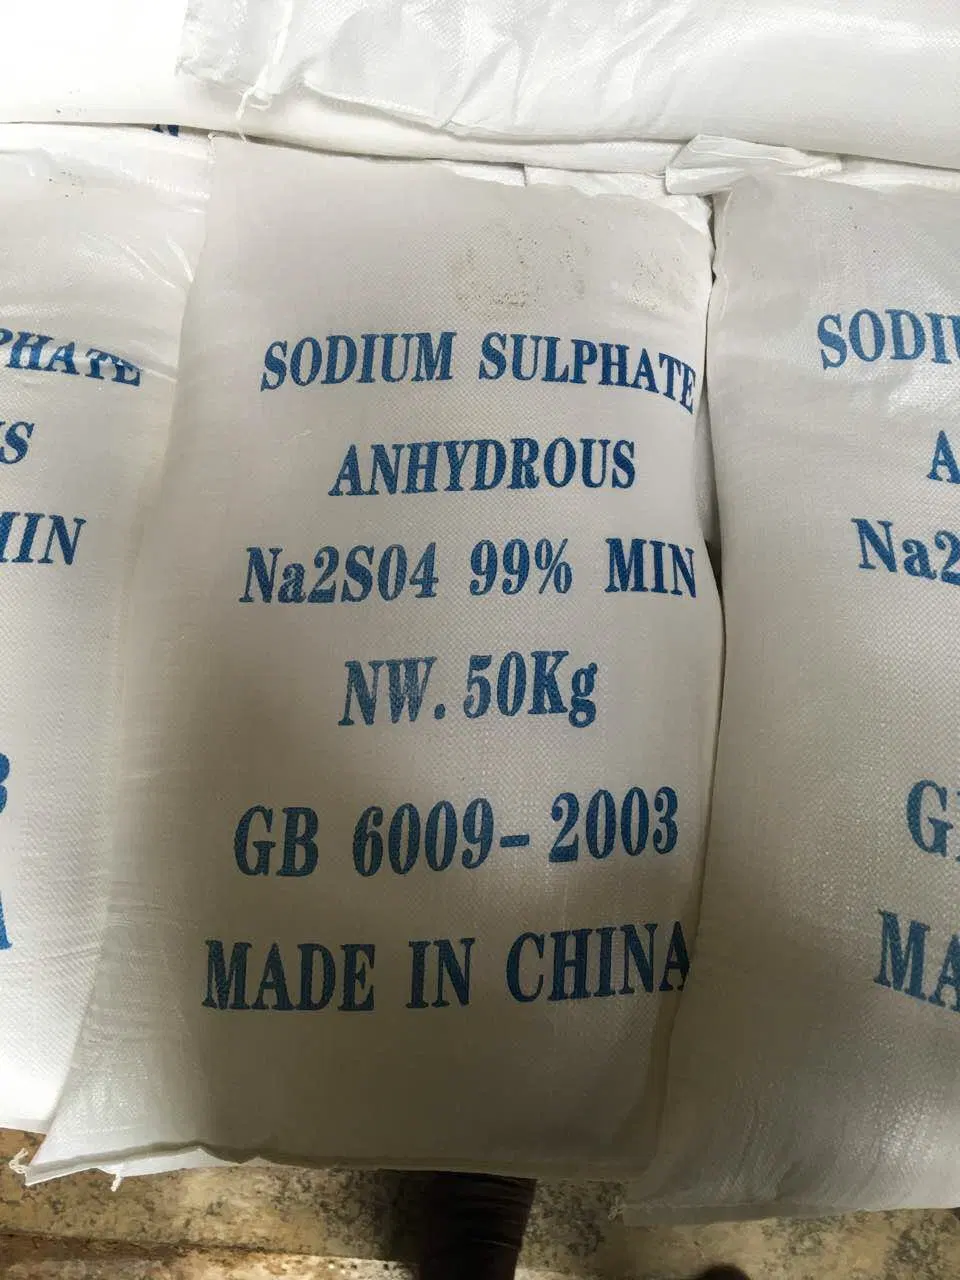 Sulfato sódico anhidro de grado industrial 99% Min CAS: 7757-82-6 Na2SO4